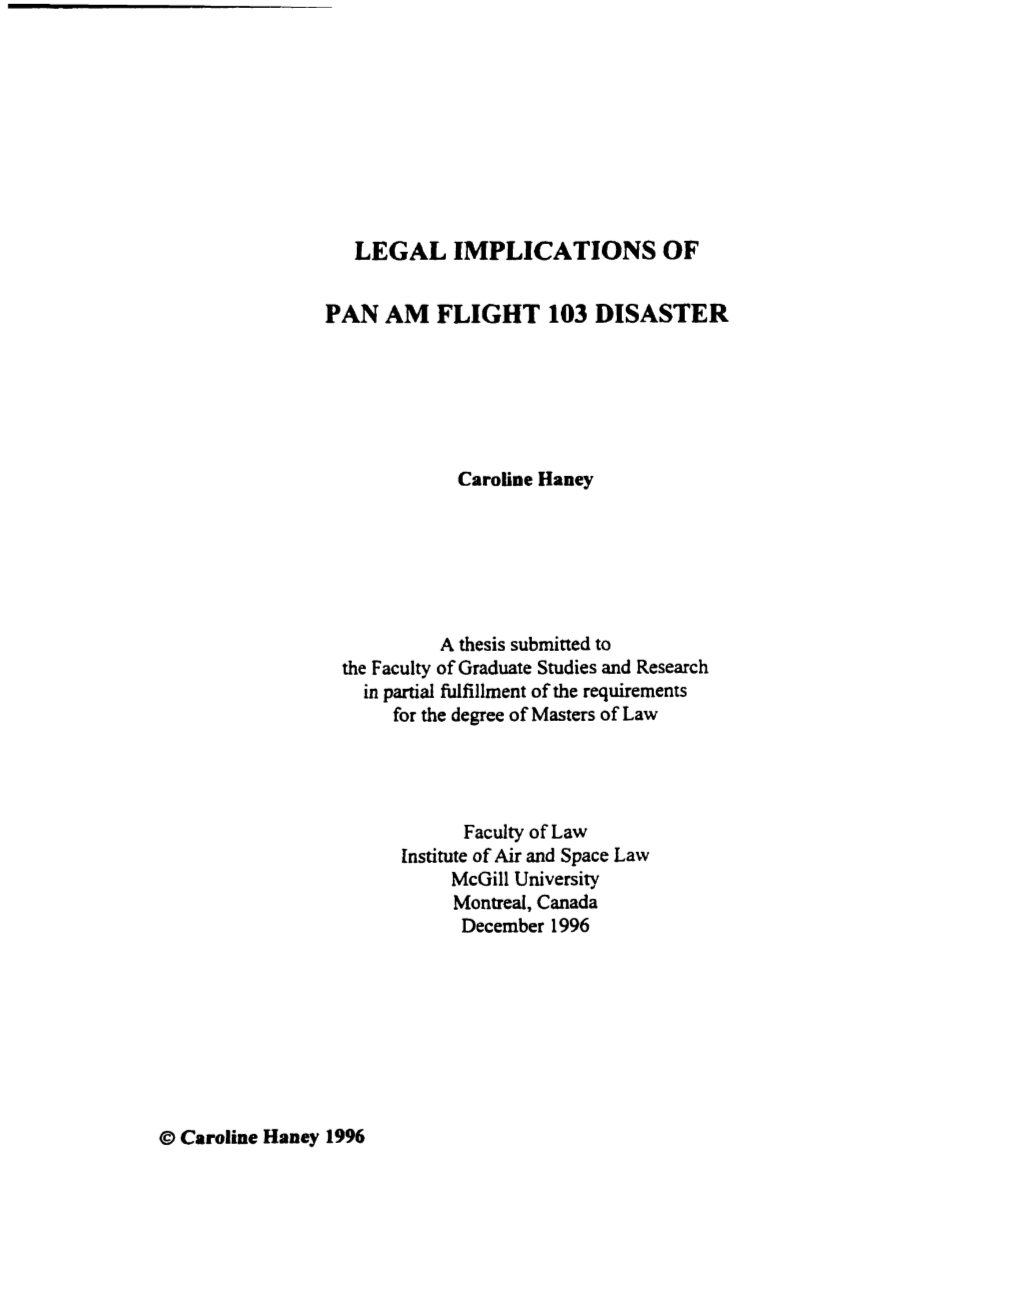 Legal Implications of Pan Am Flight 103 Disaster